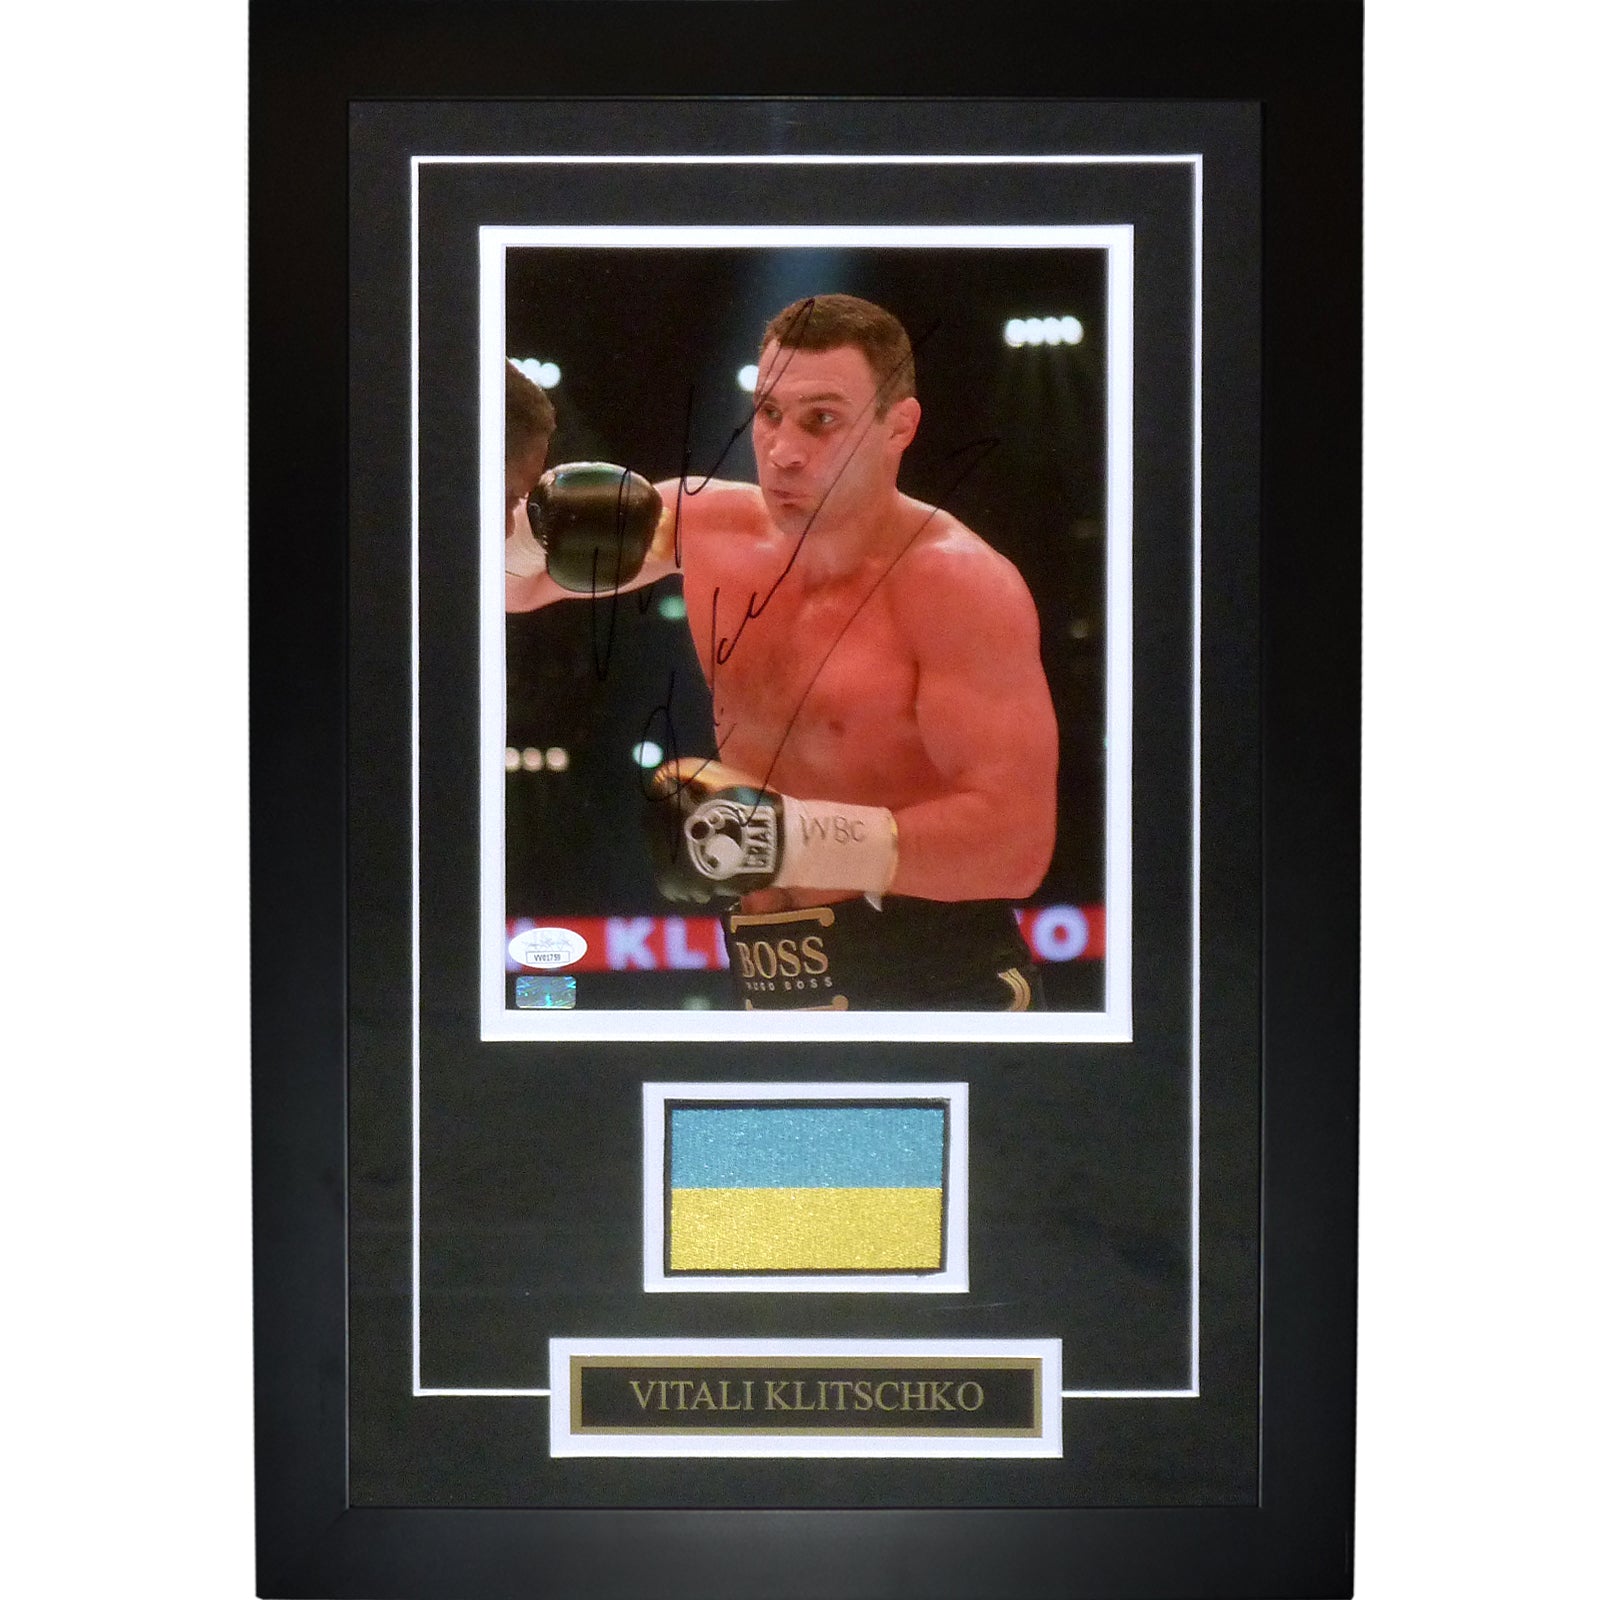 Vitali Klitschko Autographed Boxing 8x10 Photo Deluxe Framed with Ukraine Flag Patch - JSA